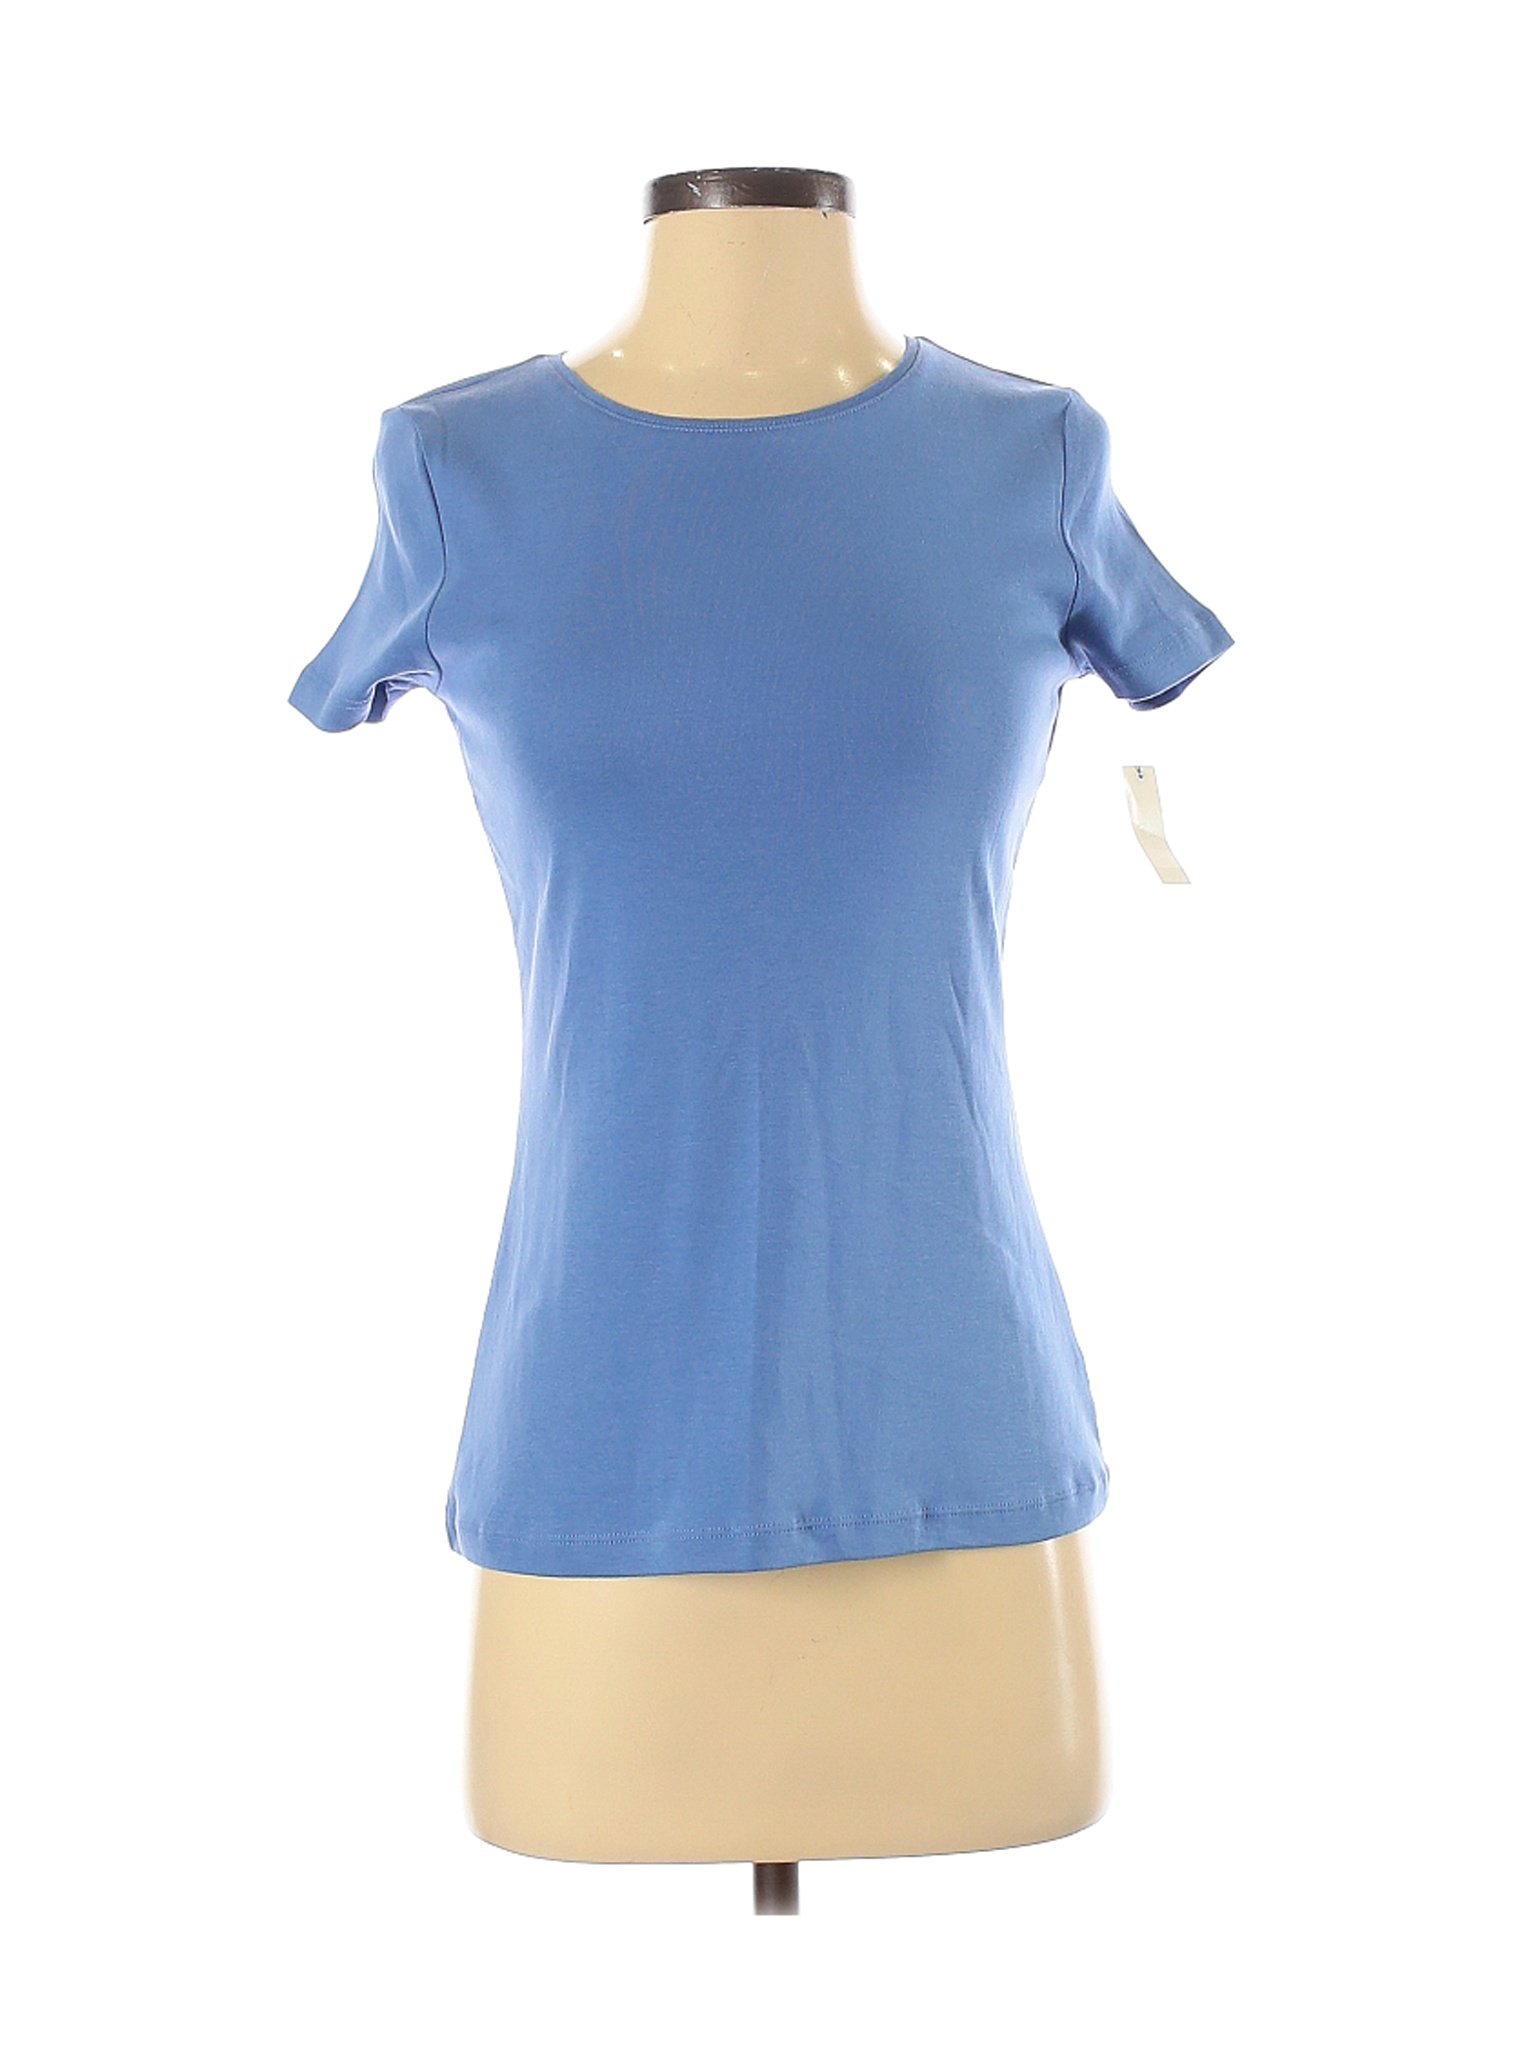 NWT Talbots Women Blue Short Sleeve T-Shirt P Petites | eBay